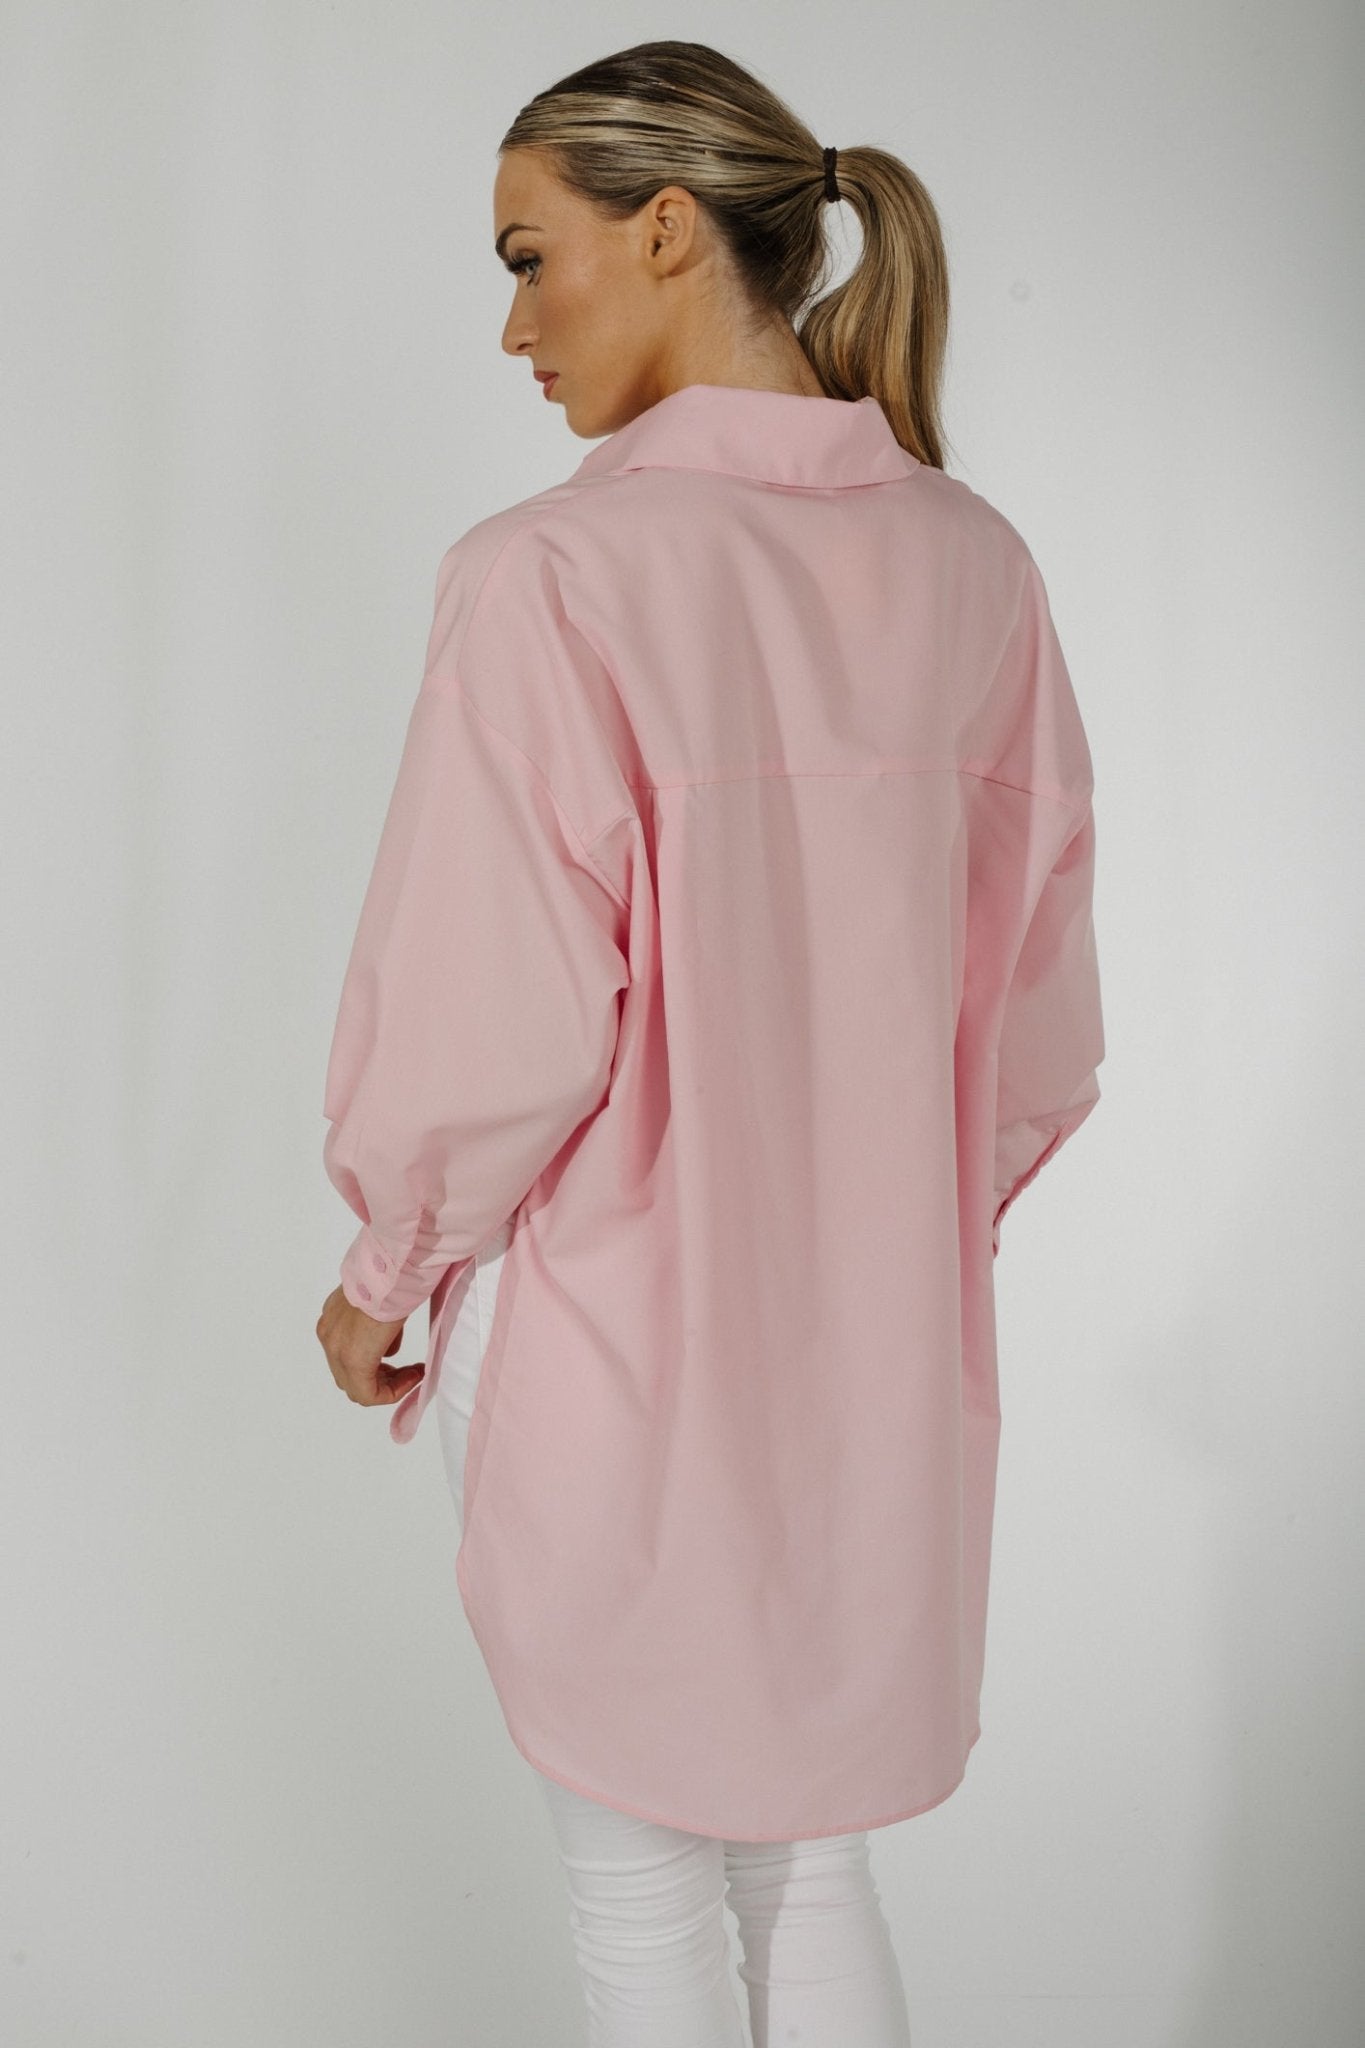 Kate Shirt In Pink - The Walk in Wardrobe